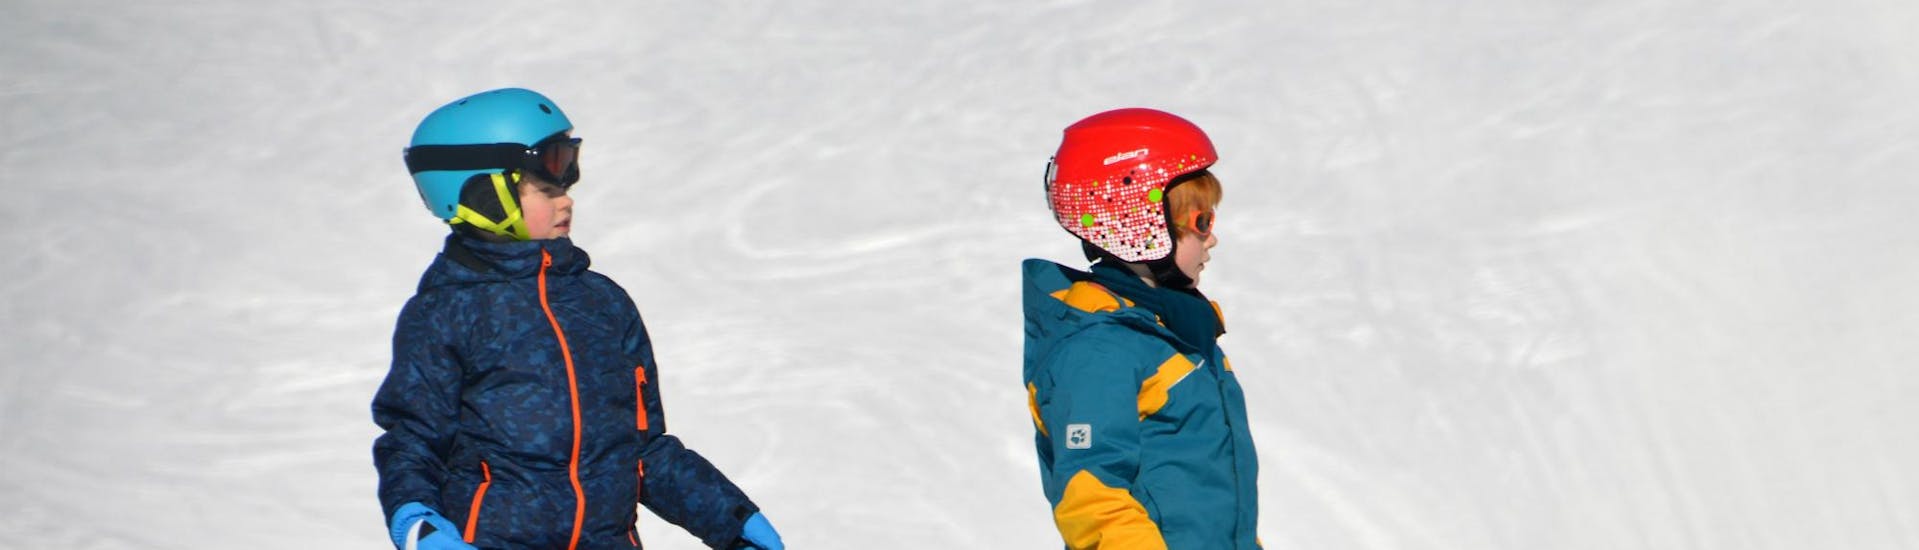 Private Ski Lessons "Premium" for Kids of All Levels.